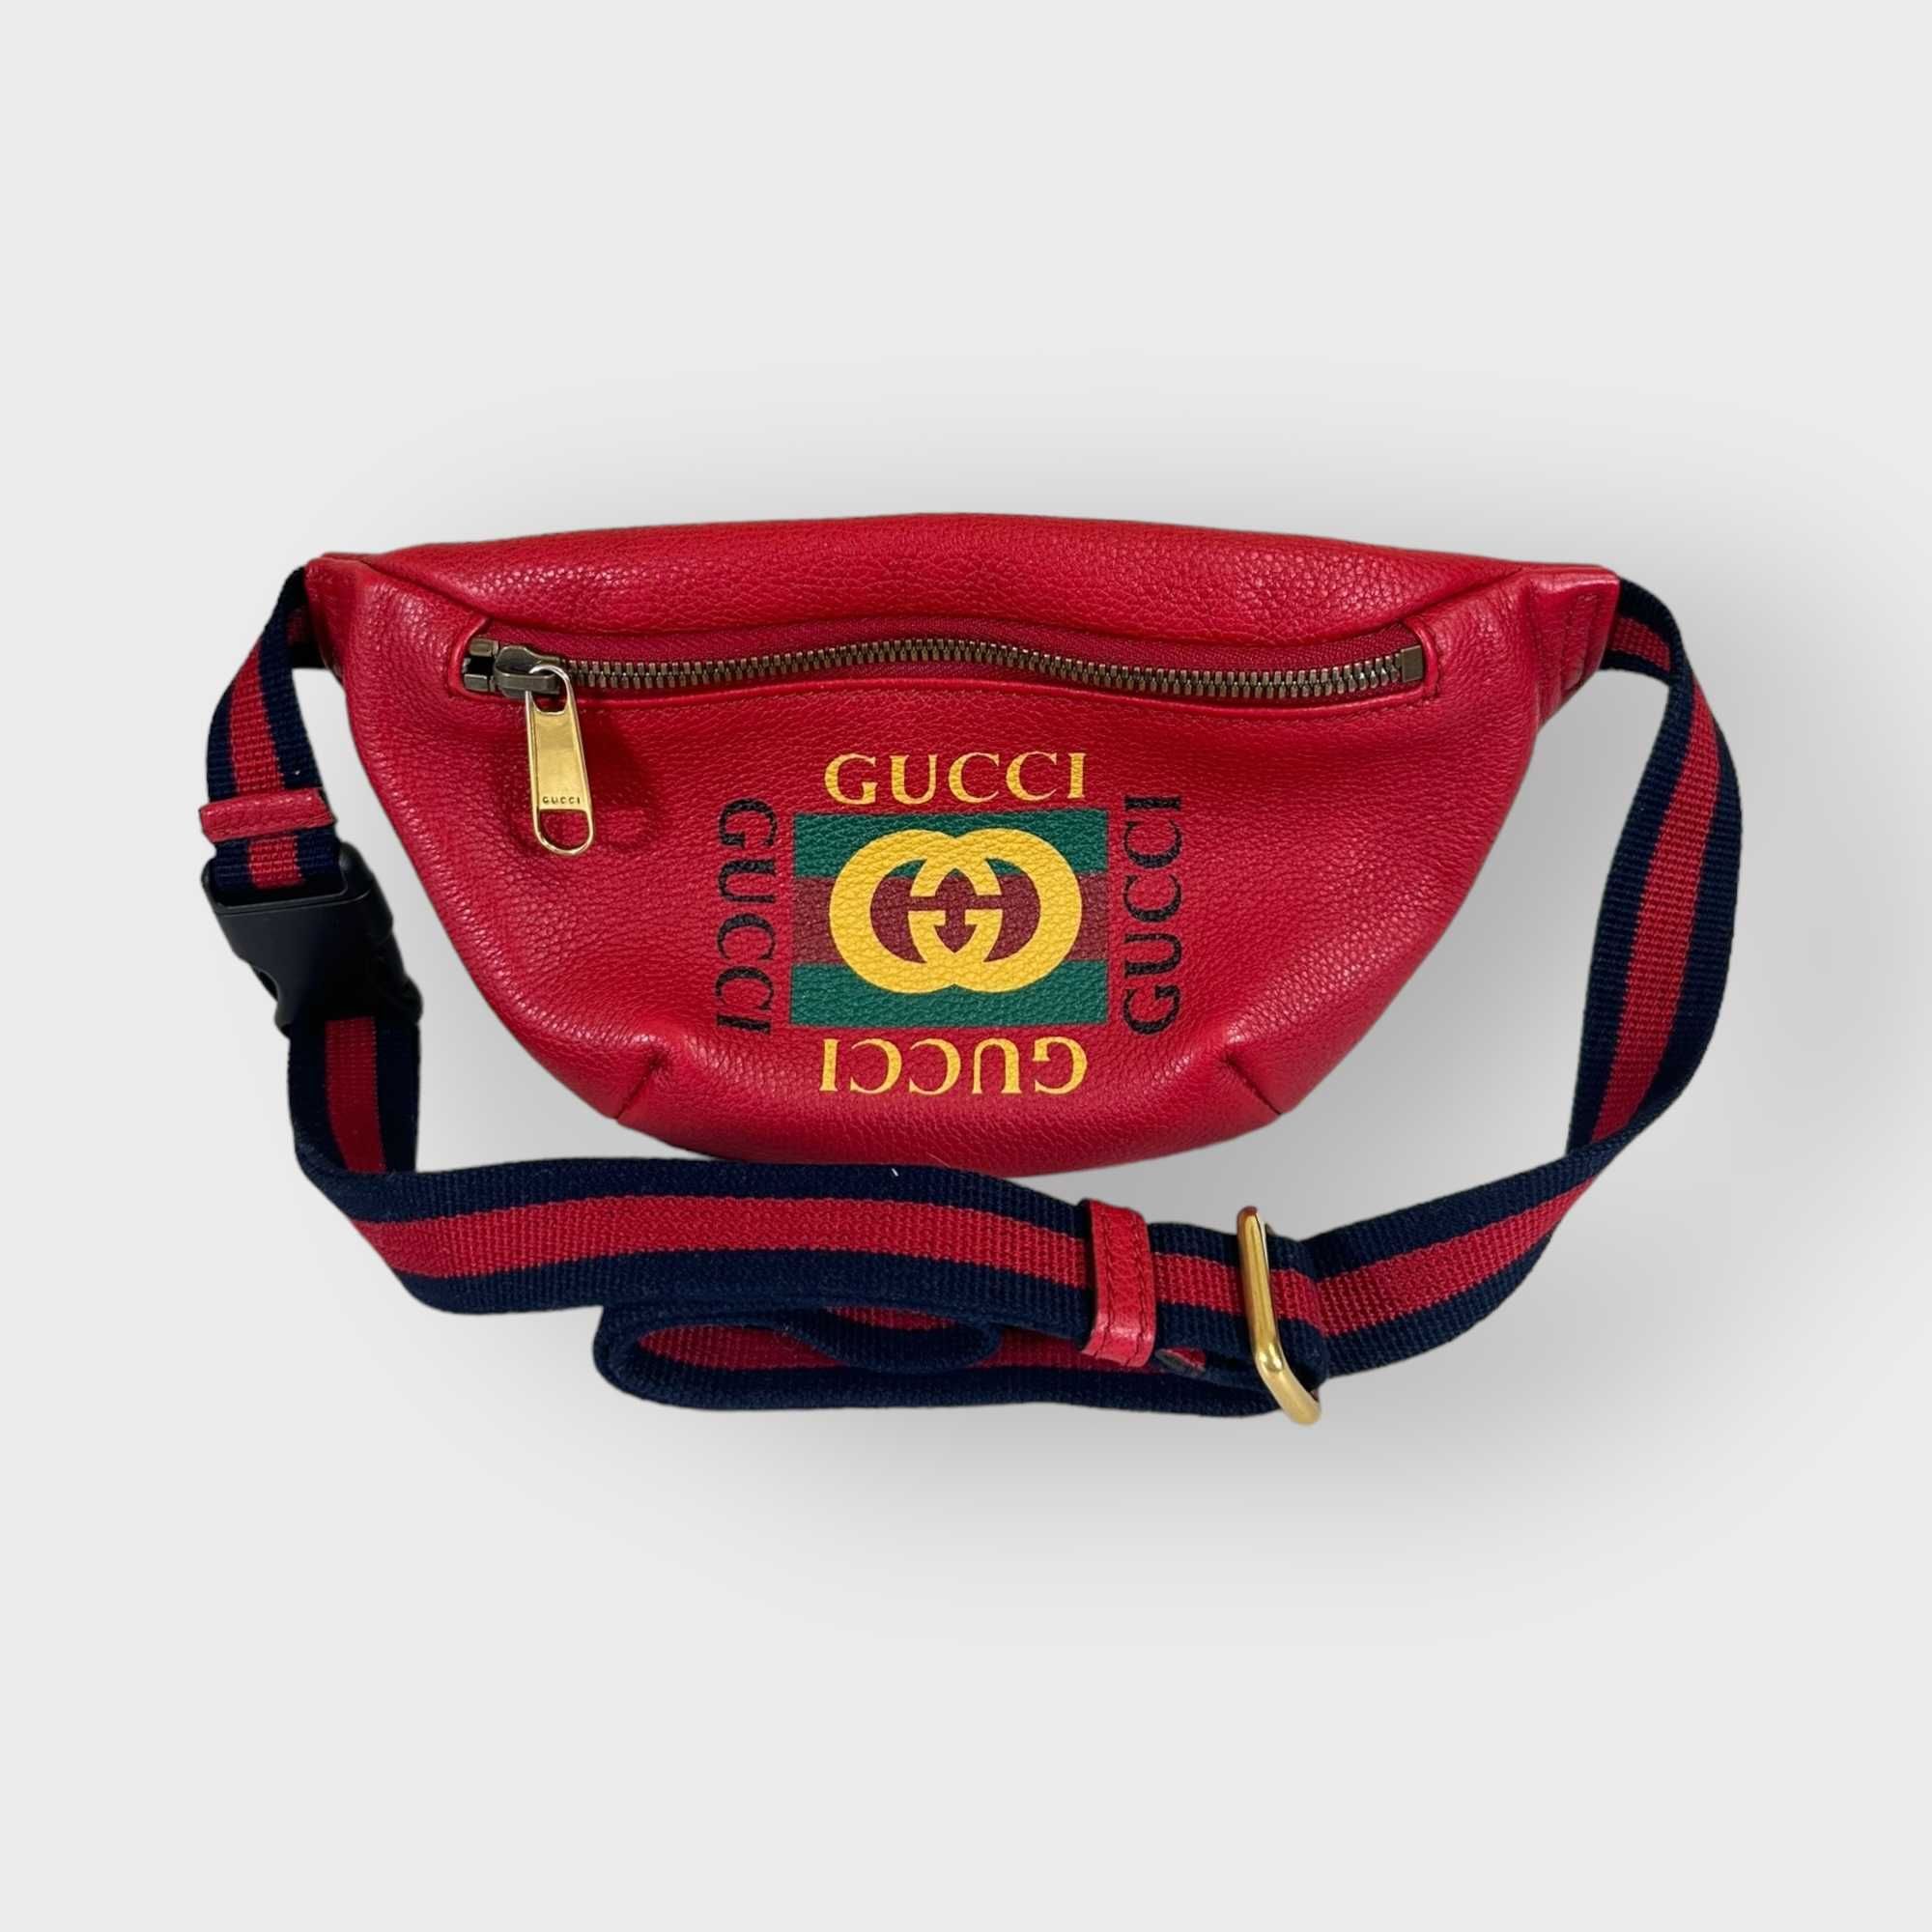 Oryginalna Nerka Gucci Distressed Logo Czerwona Beltbag Web